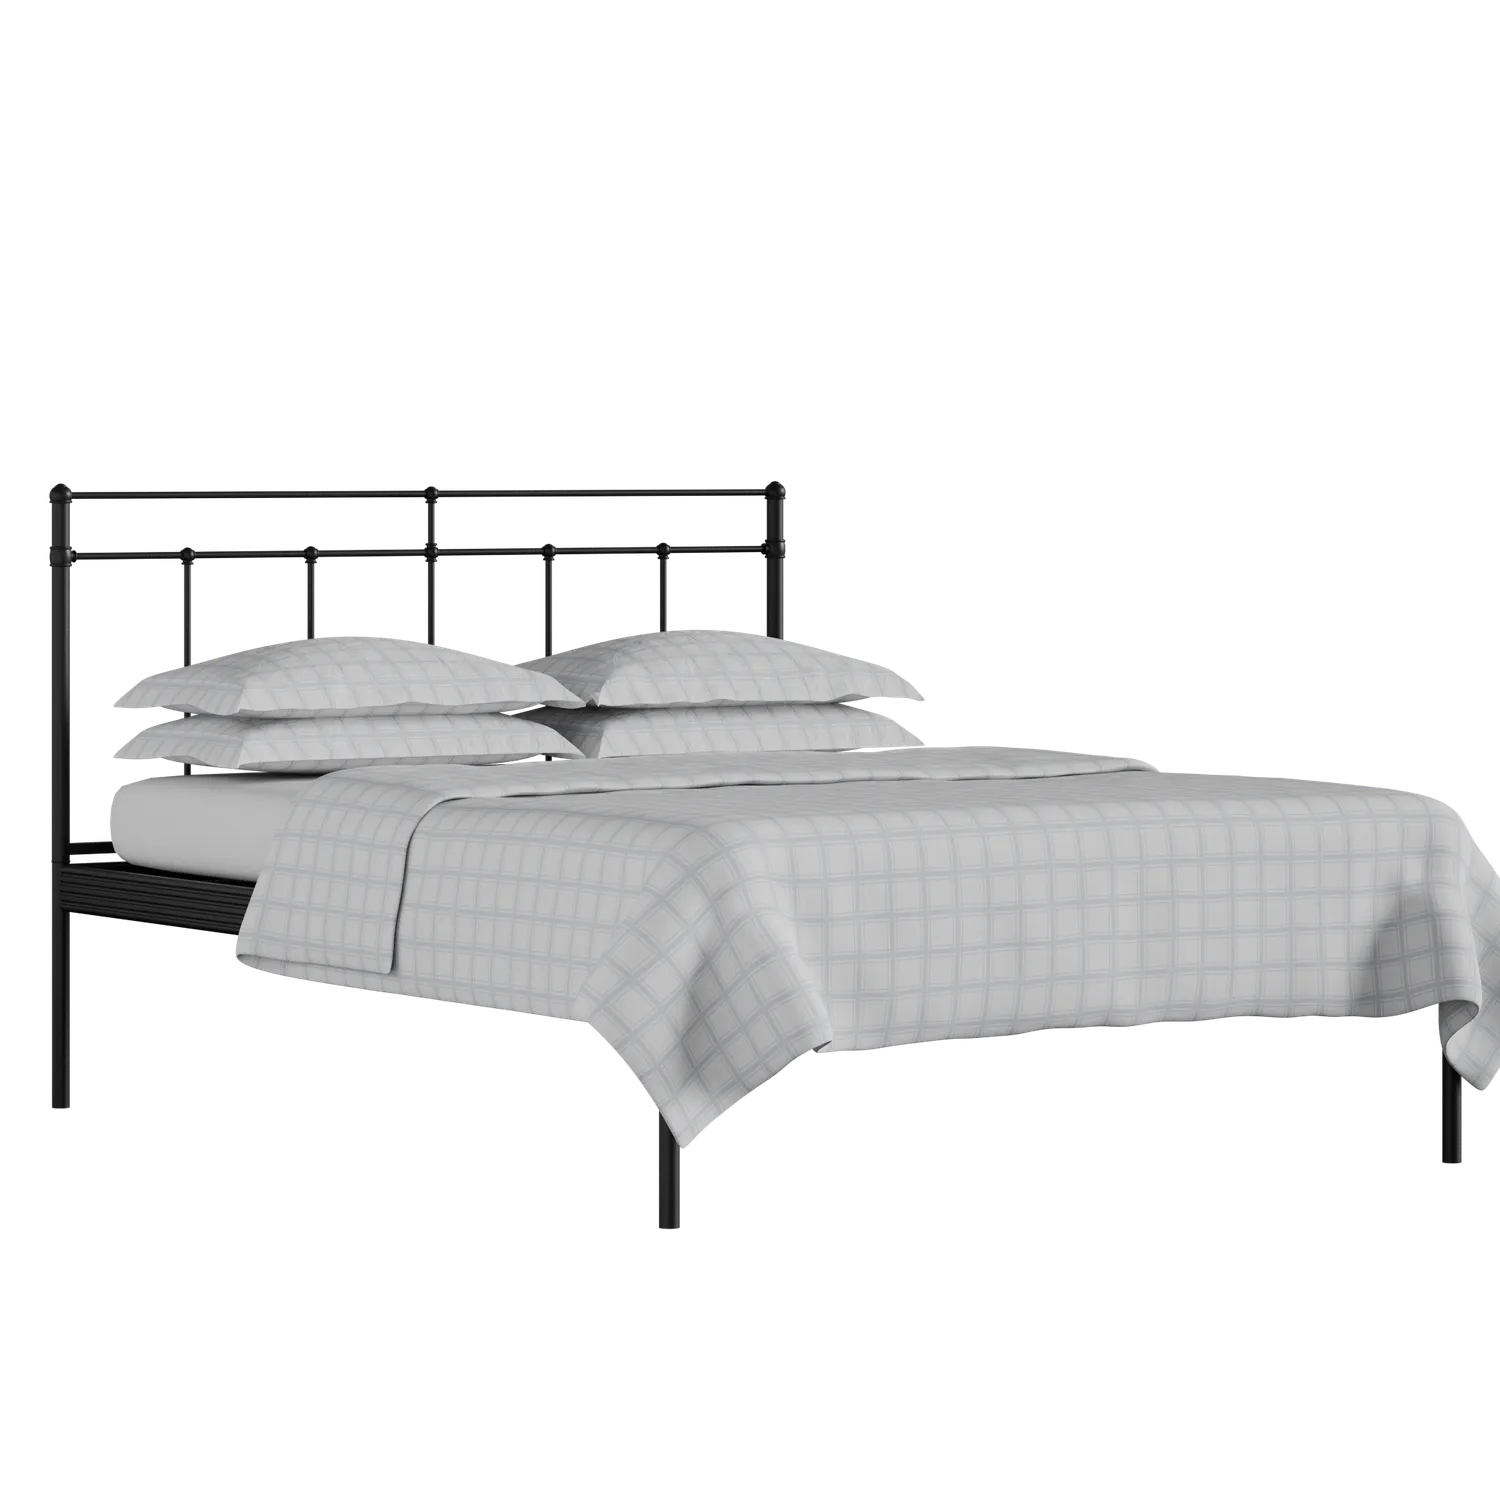 Richmond iron/metal bed in black with Juno mattress